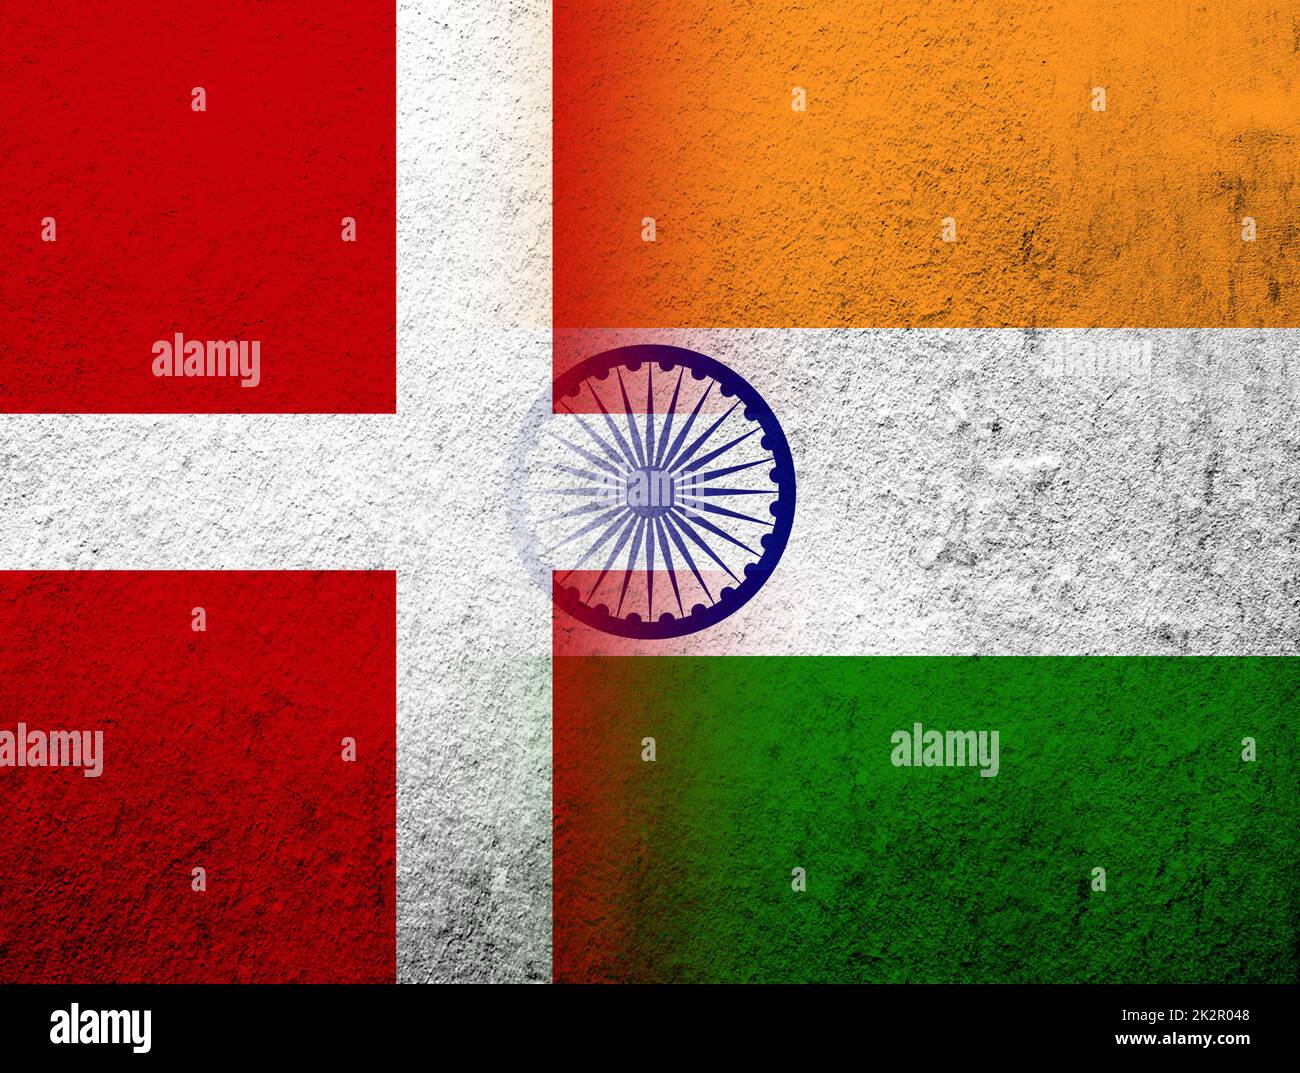 the Kingdom of Denmark National flag with flag of India. Grunge Background Stock Photo